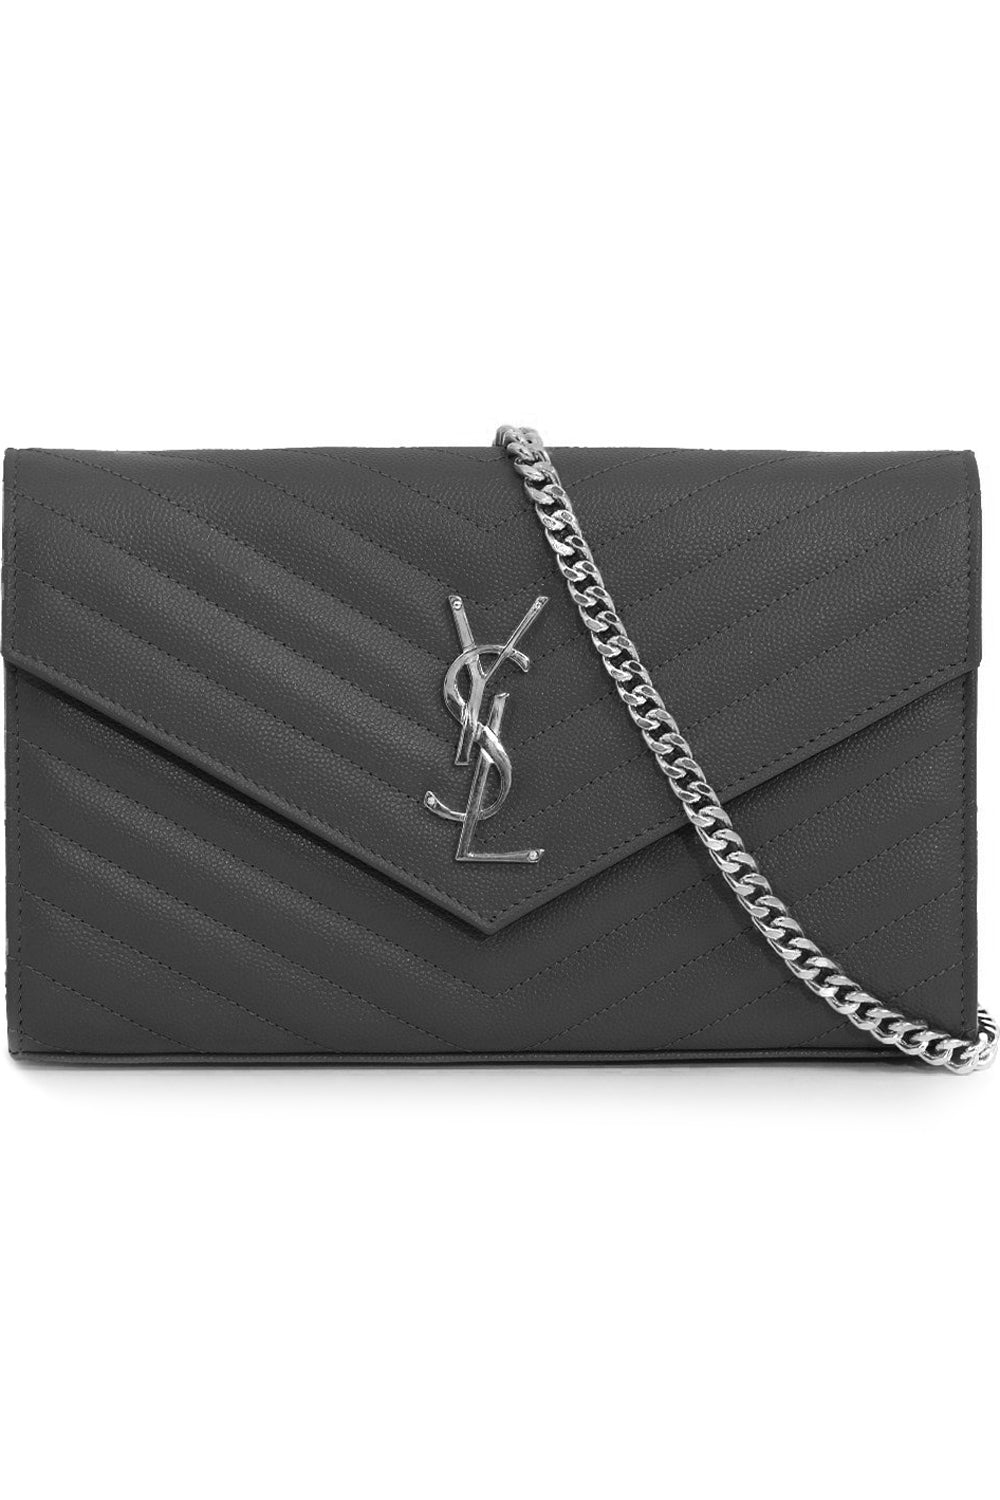 YSL Chain Envelope Clutch Bag Black